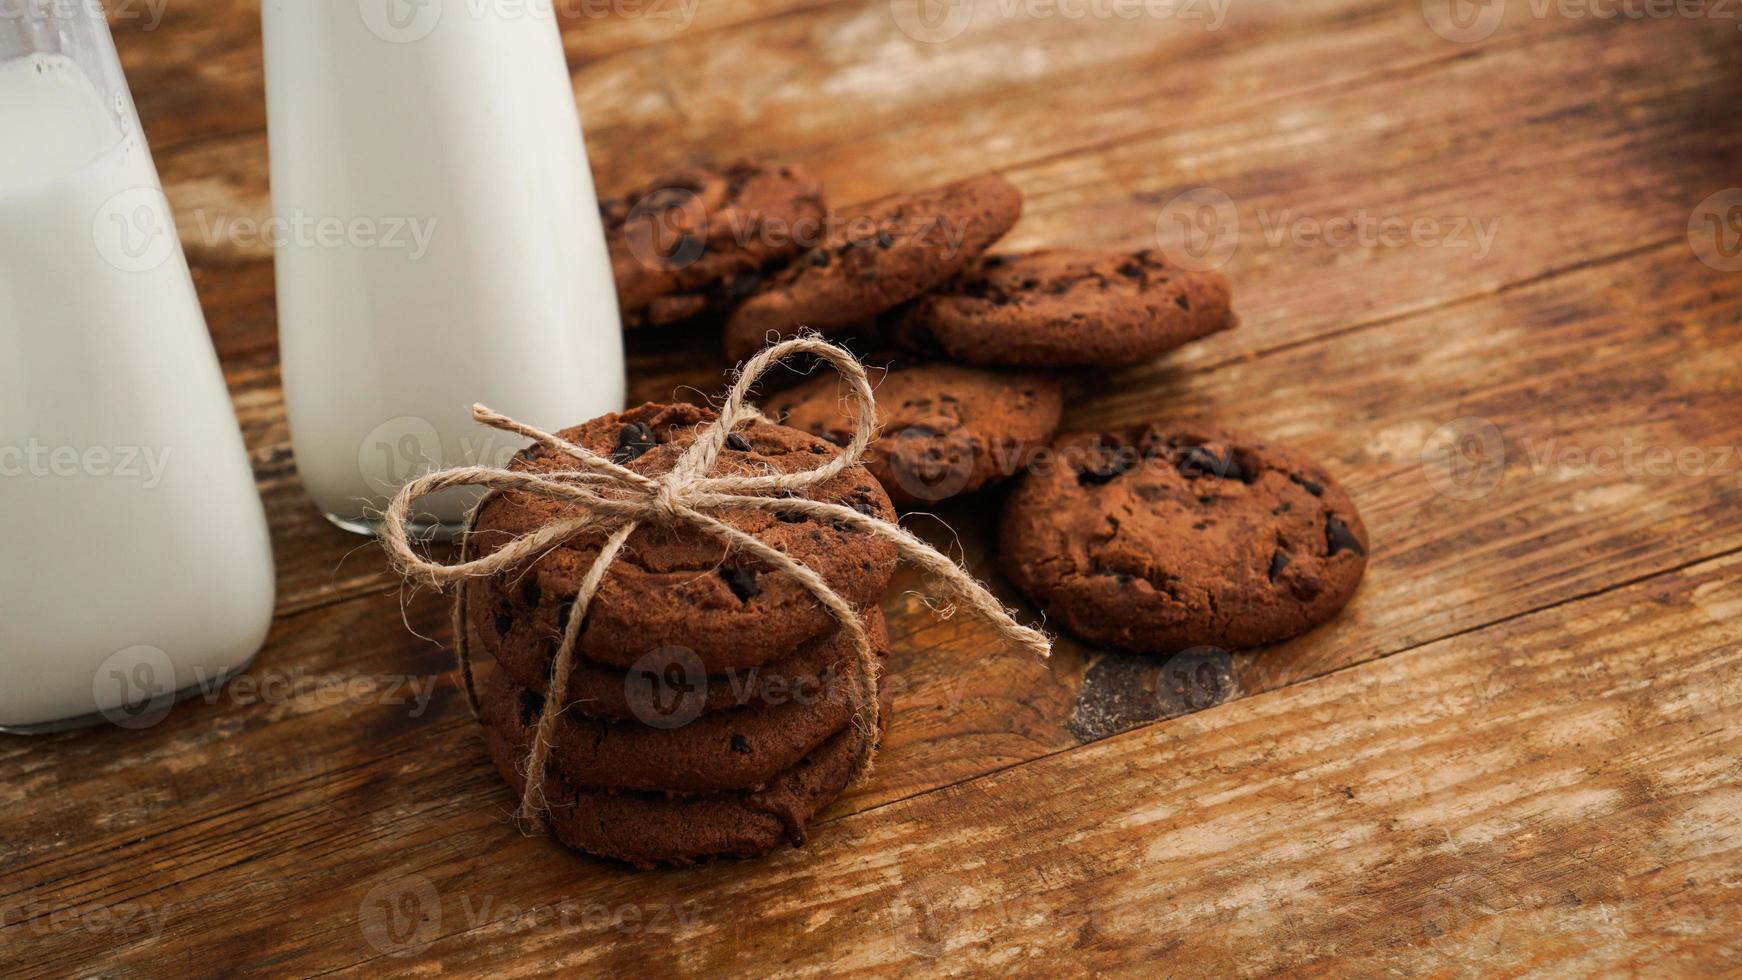 biscoito de chocolate com leite na mesa de madeira. biscoitos caseiros. foto